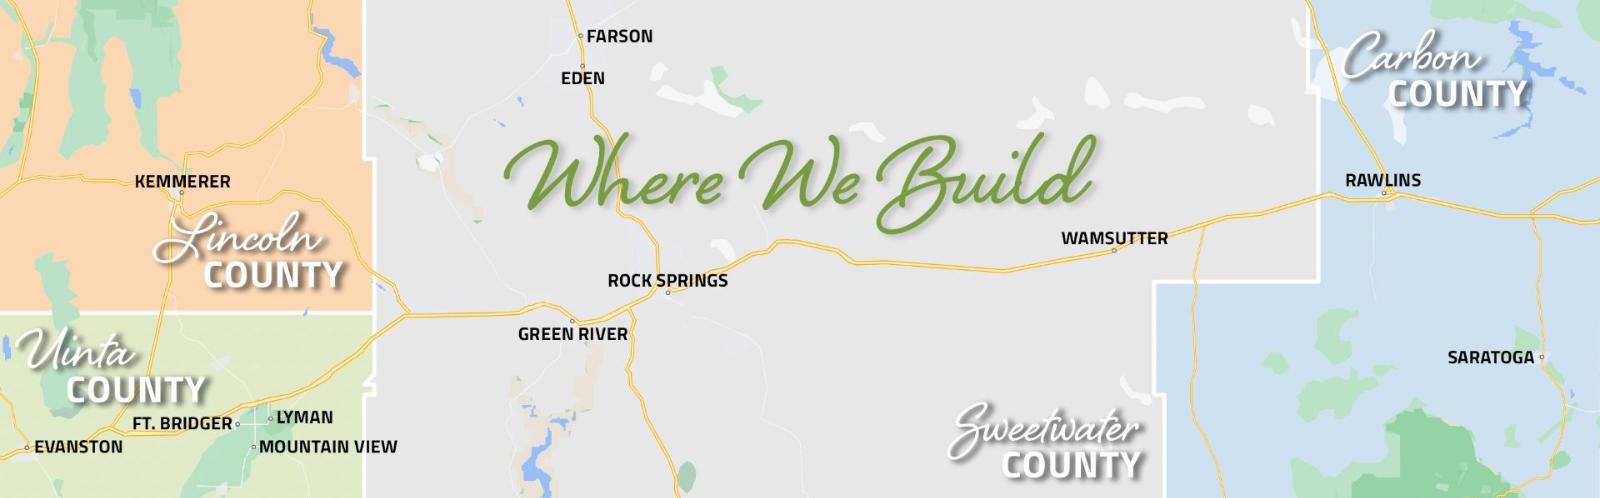 Where We Build